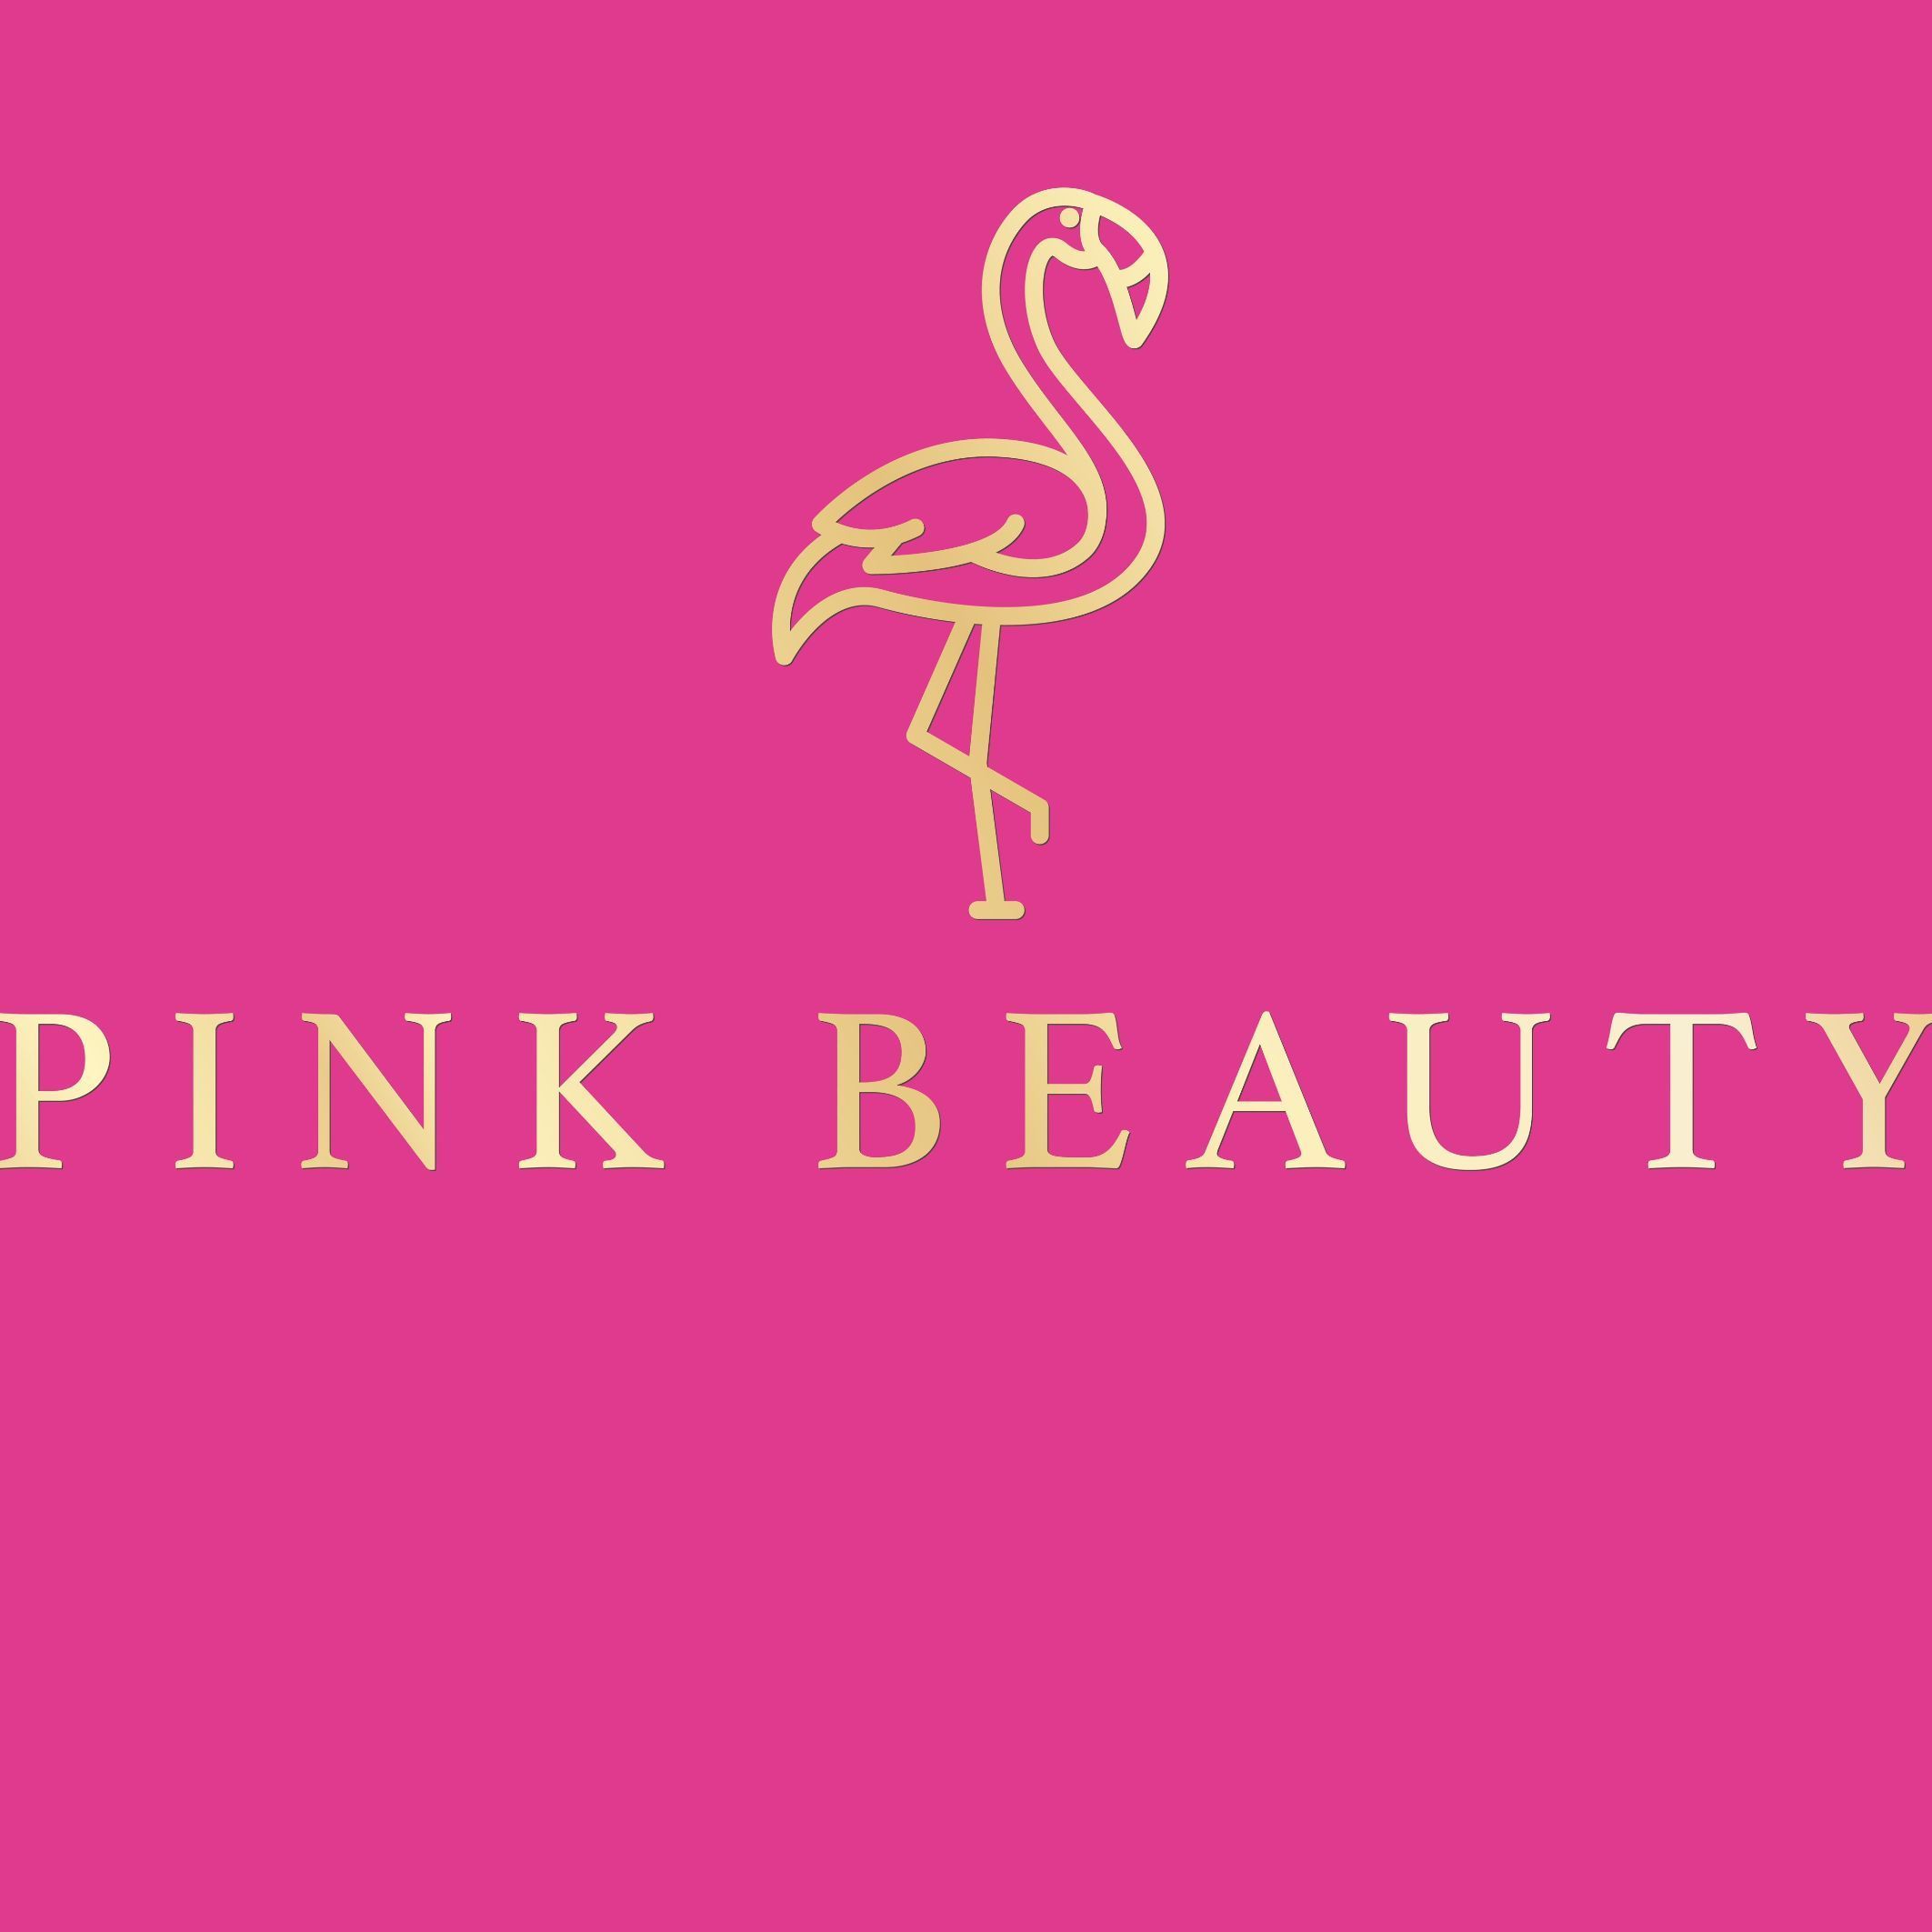 Pink Beauty Paulina Kozik, 11 Listopada 43, 43, 41-500, Chorzów